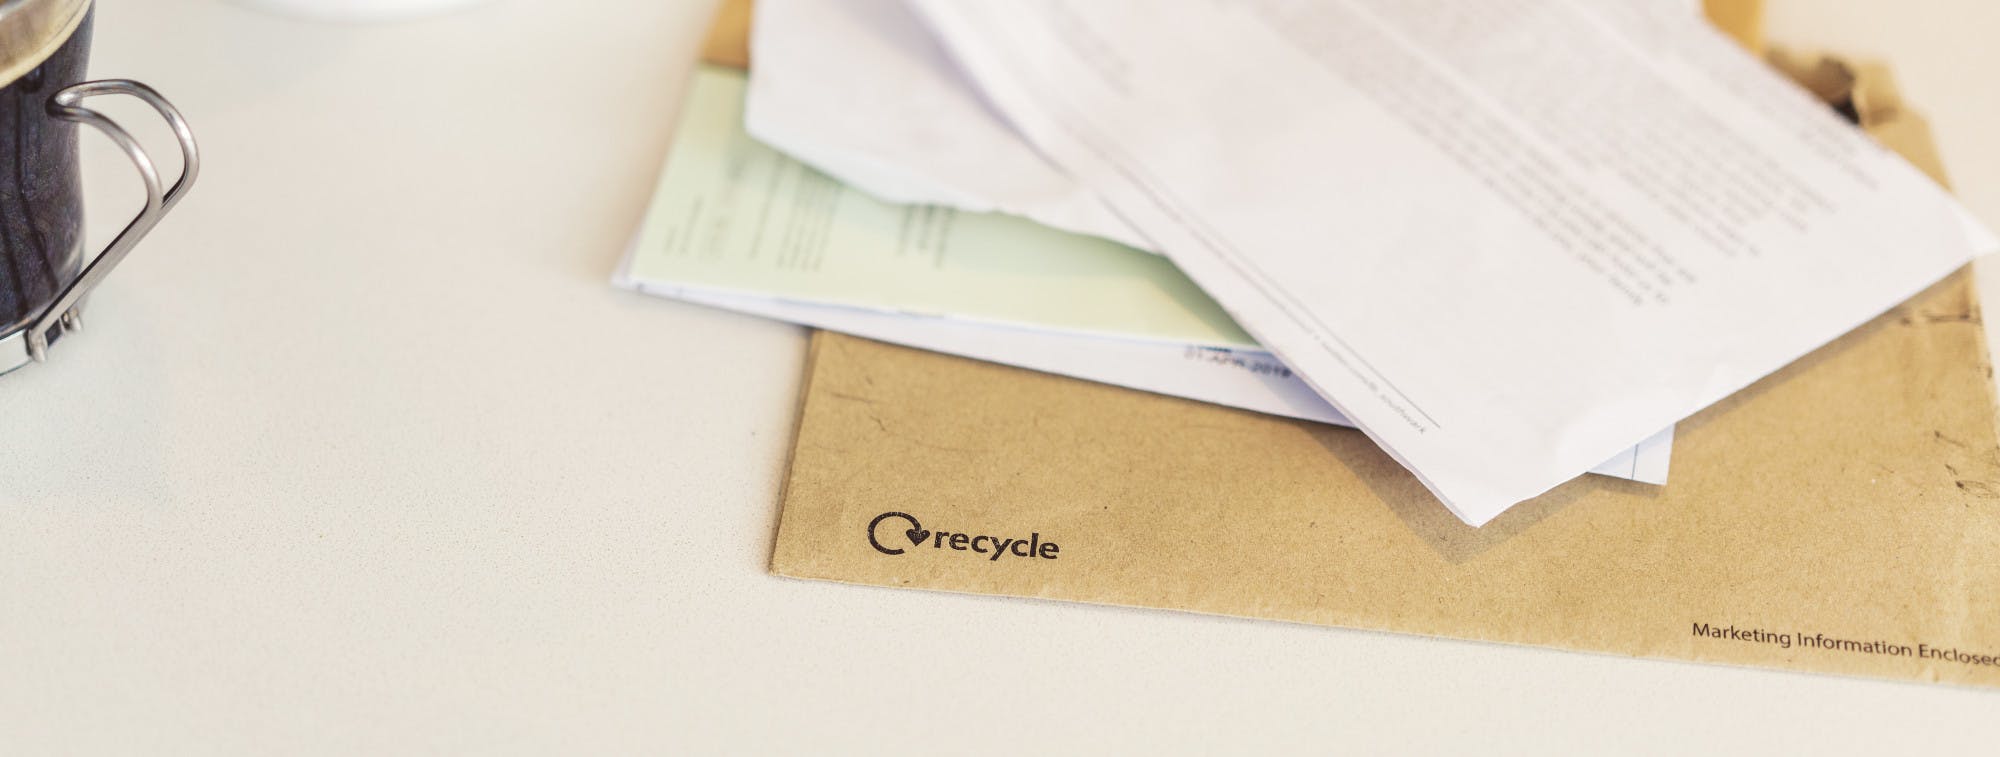 Paper and envelopes on a desk